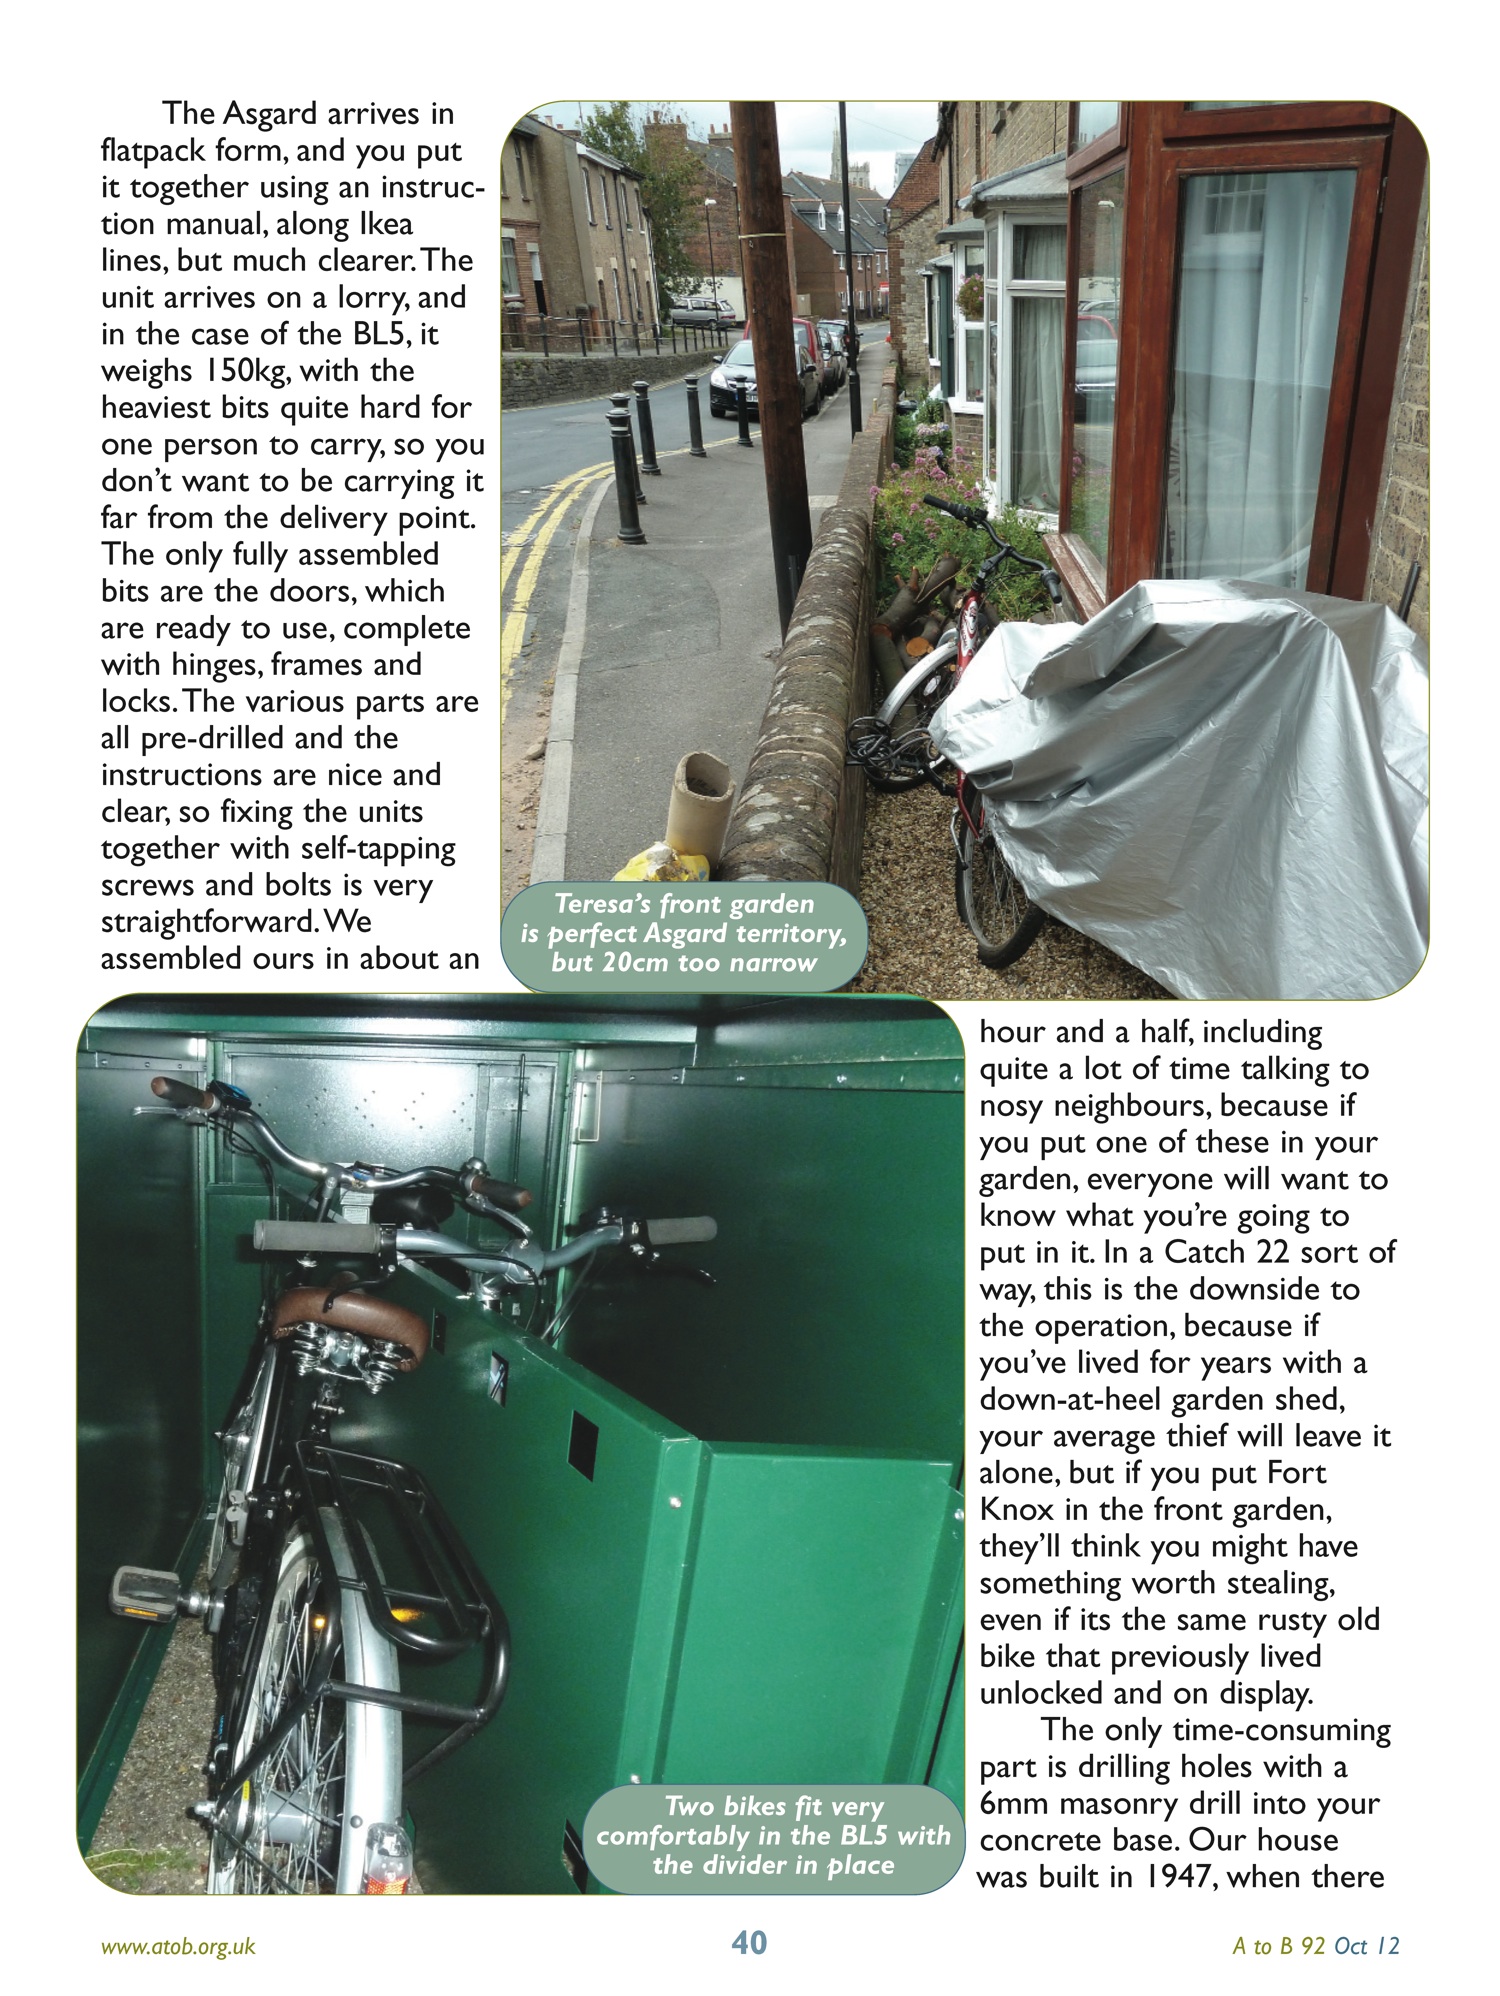 AtoB Bike Locker Review